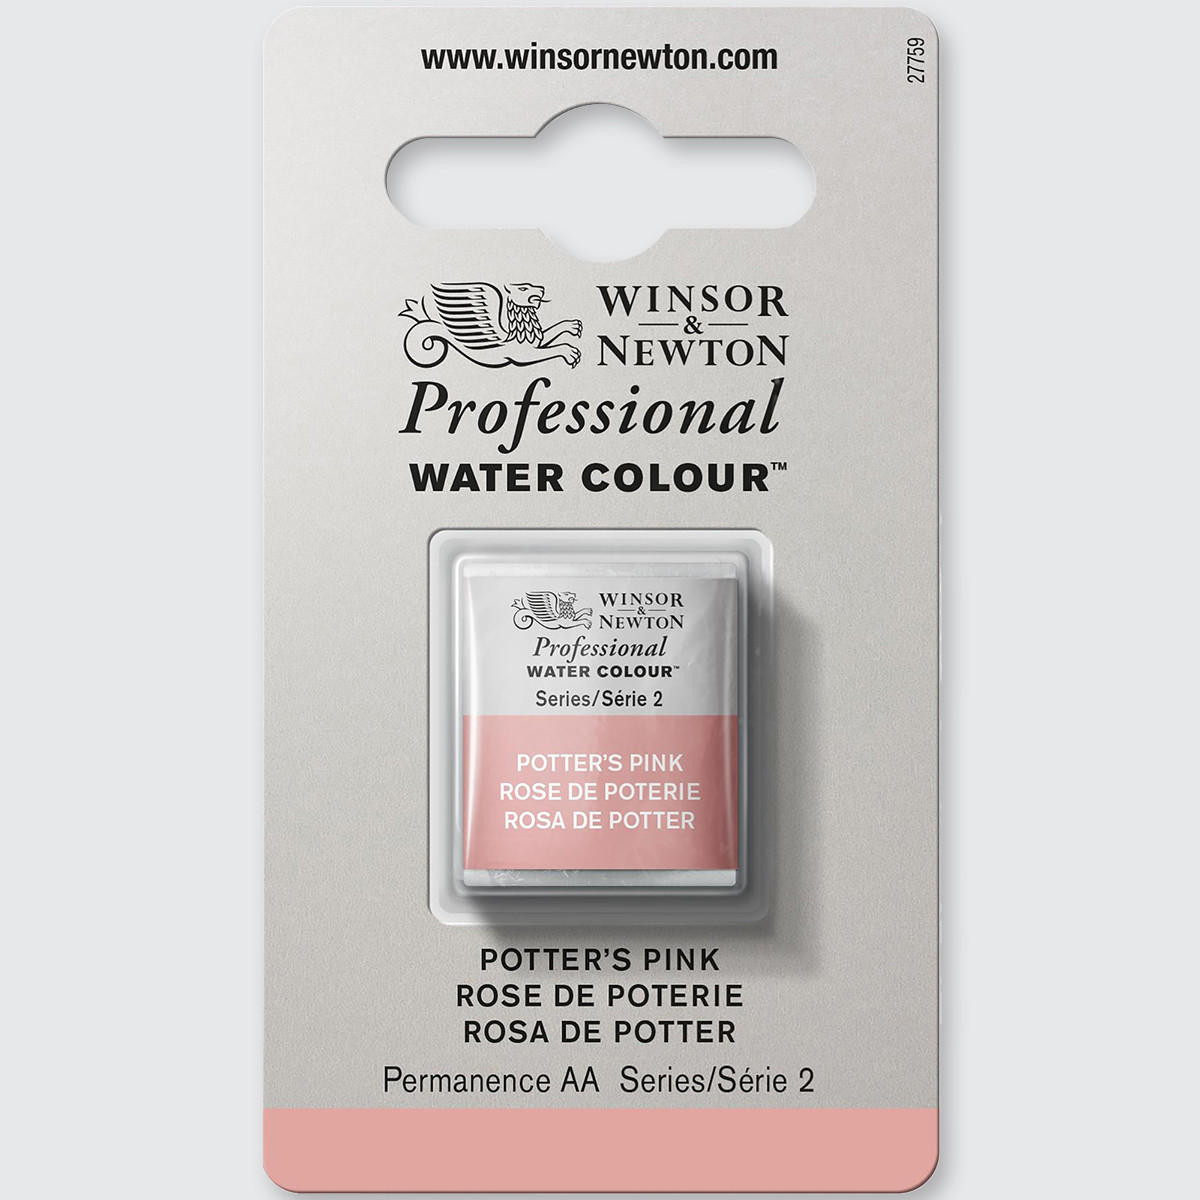 Winsor & Newton Professional Water Colour Half Pan Potter’s Pink